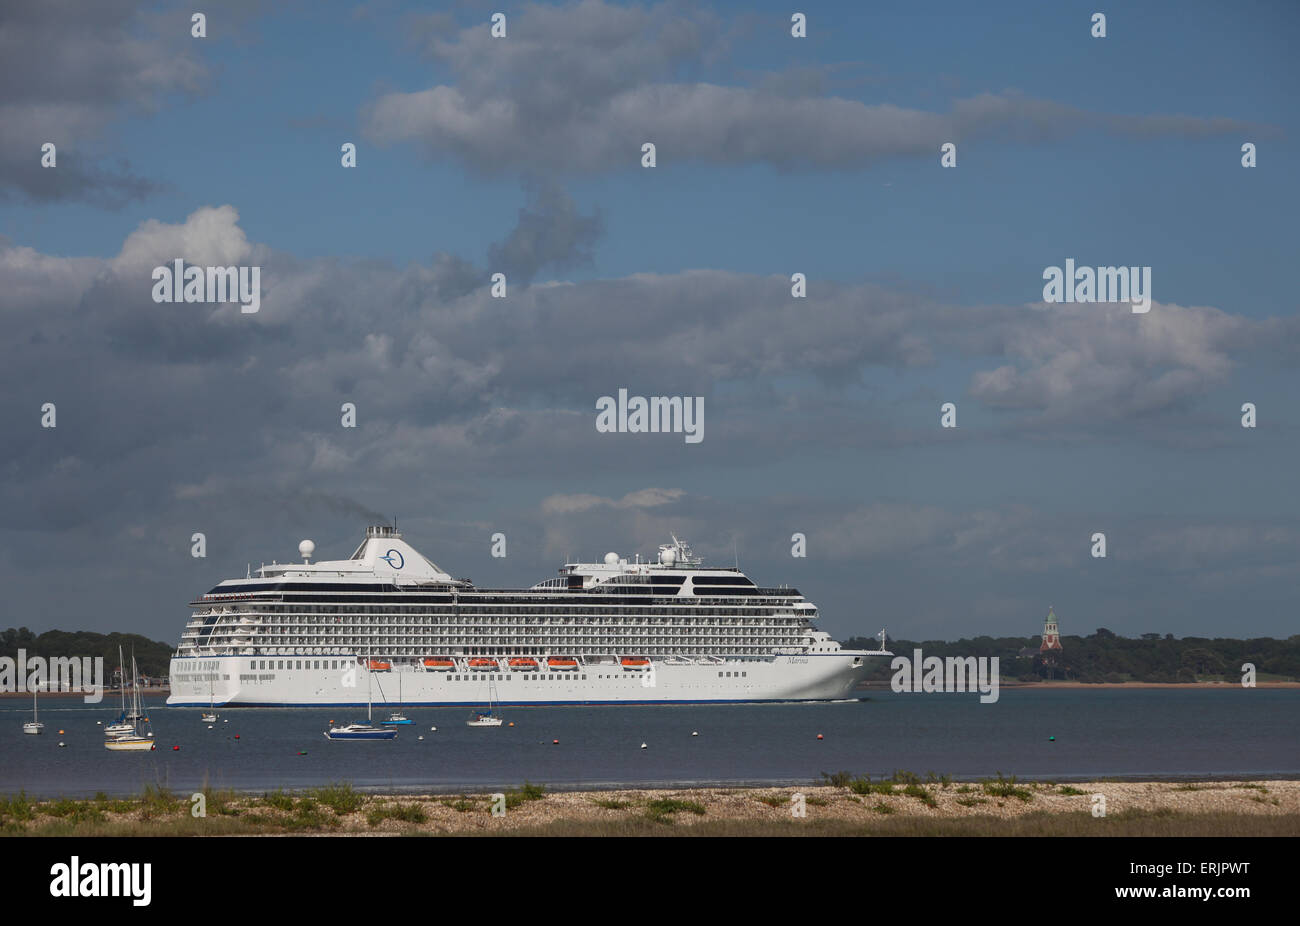 Oceania Cruise ship MS Marina pictured leaving Southampton Stock Photo